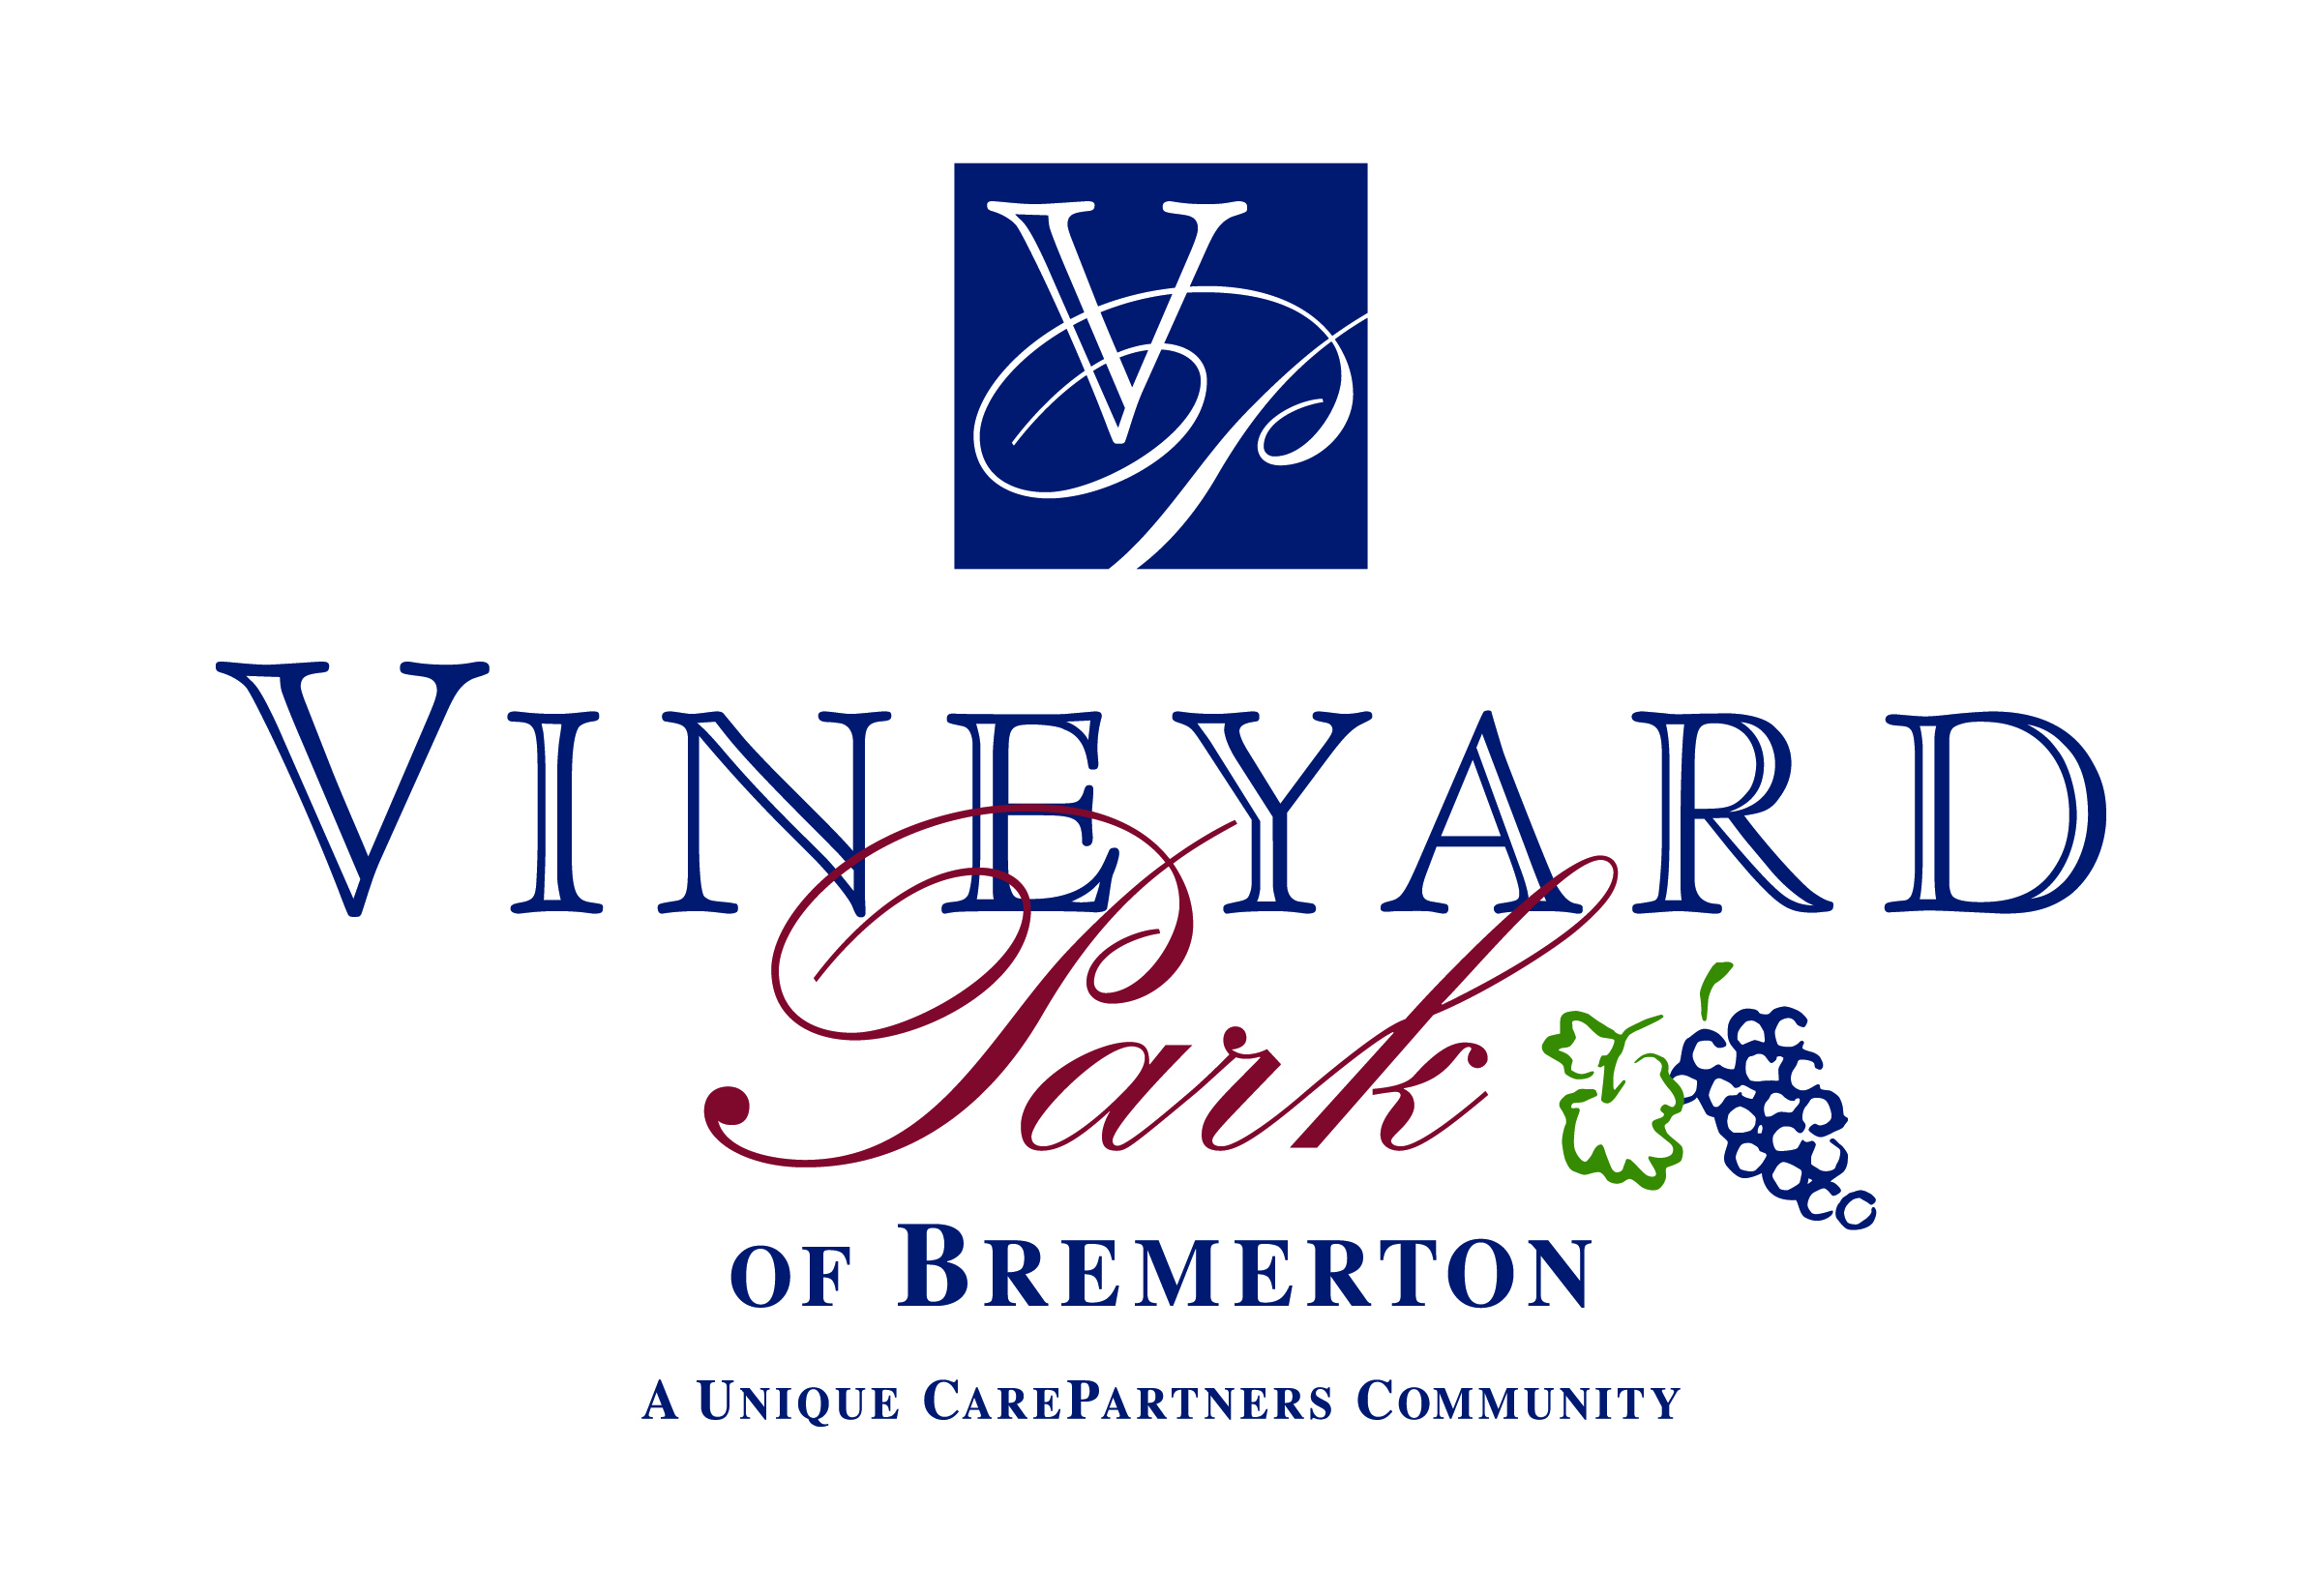 Vineyard Park of Bremerton logo